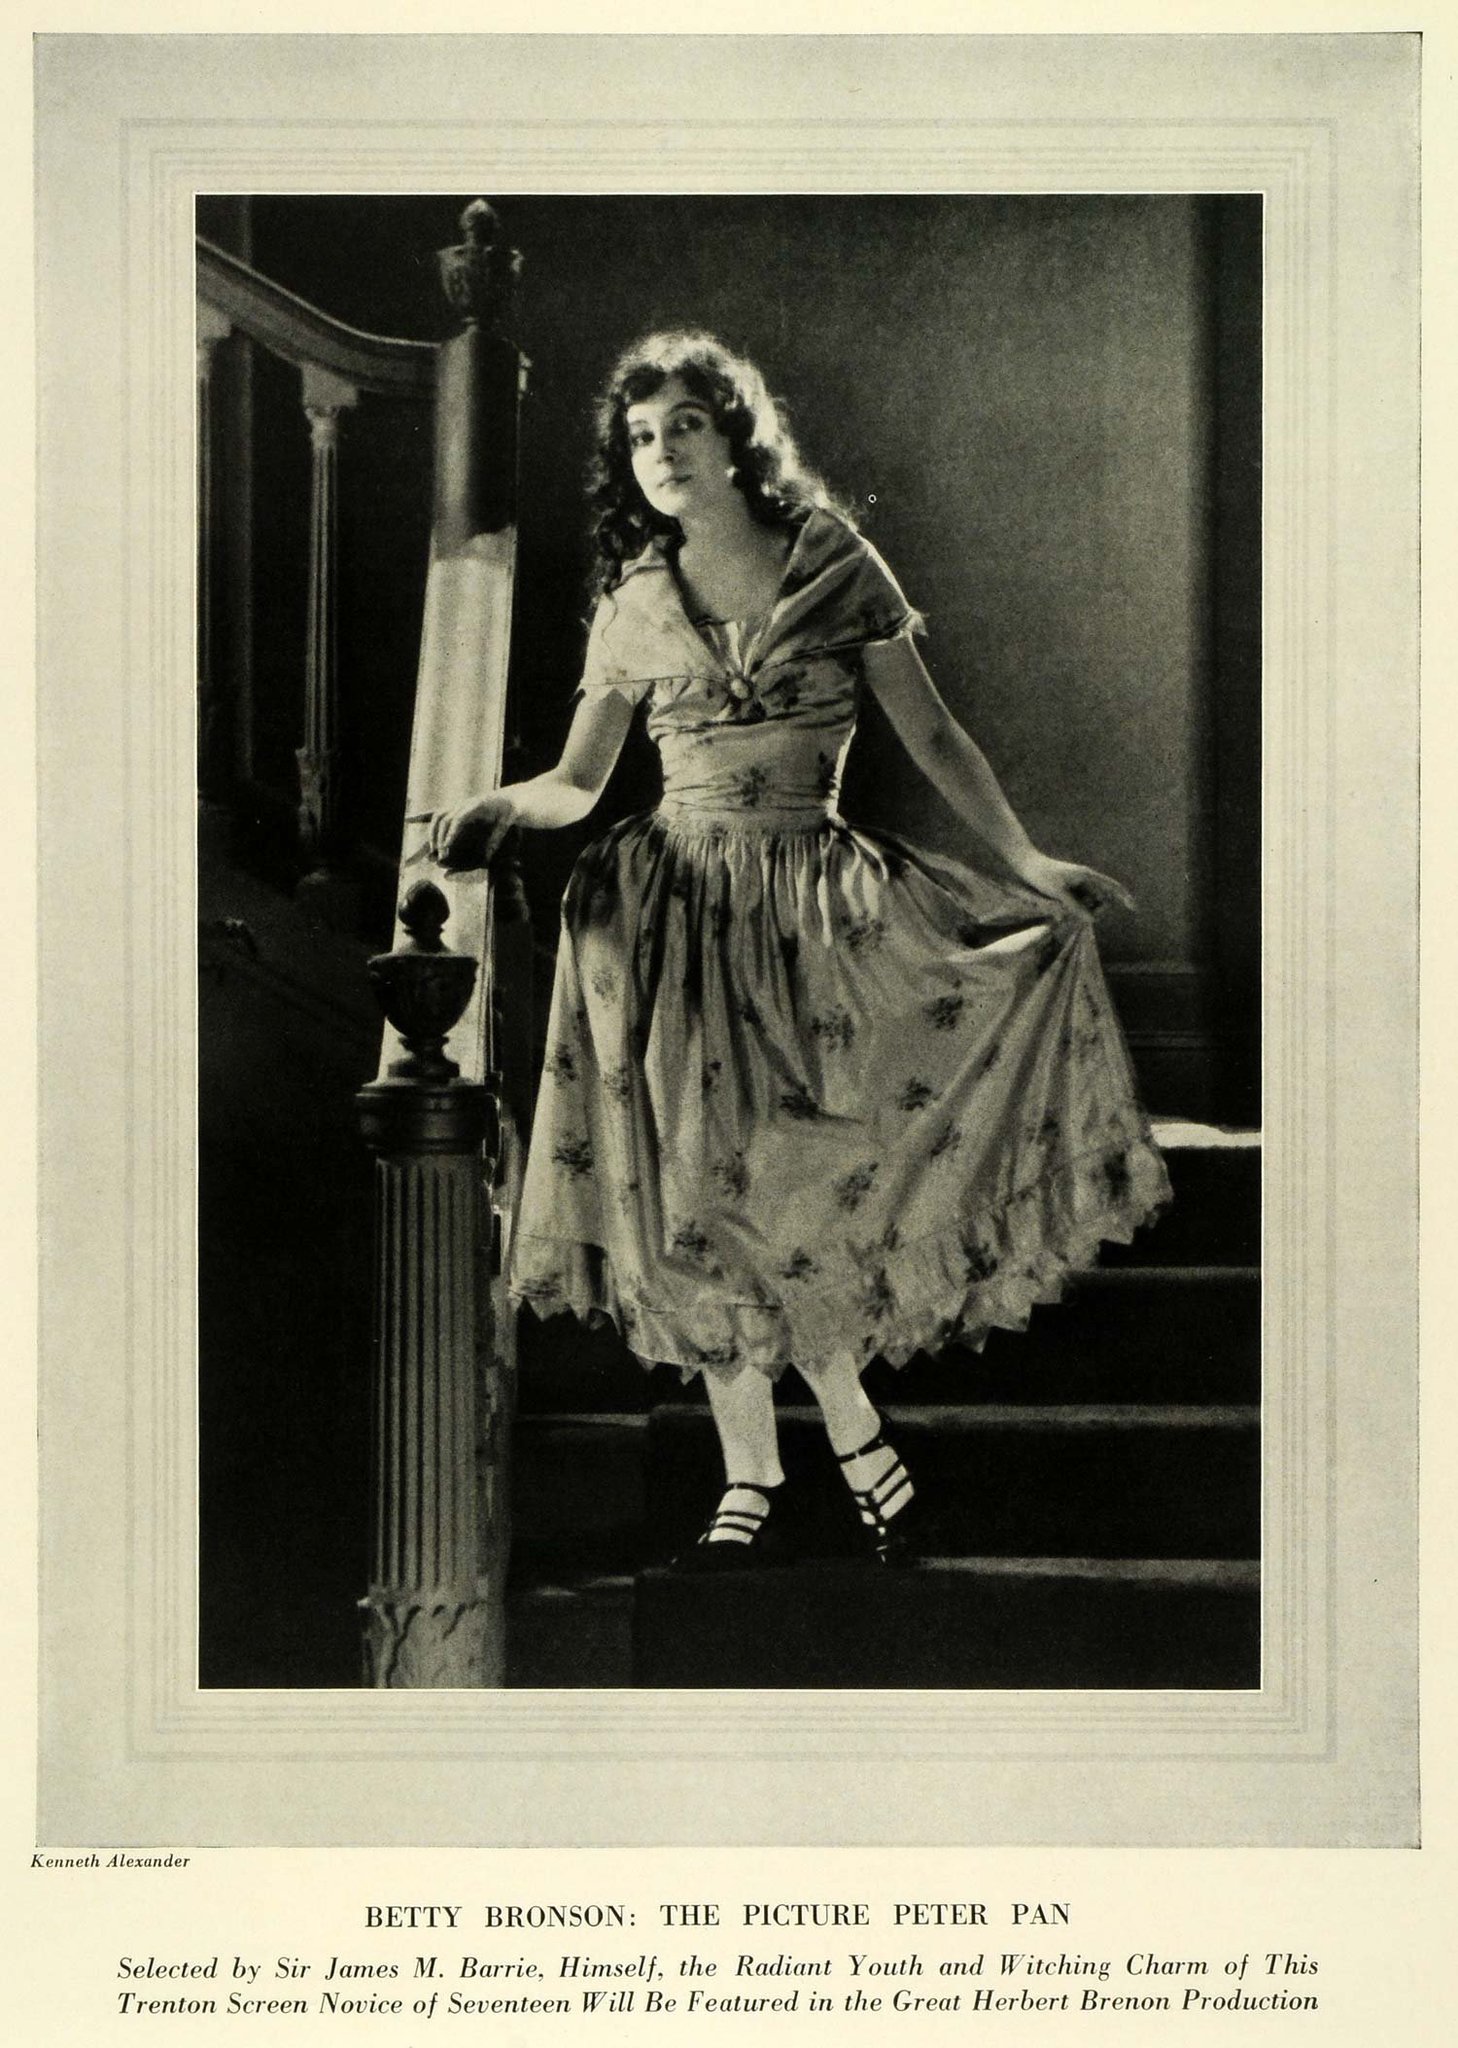 Peter Pan (1924) Screenshot 1 